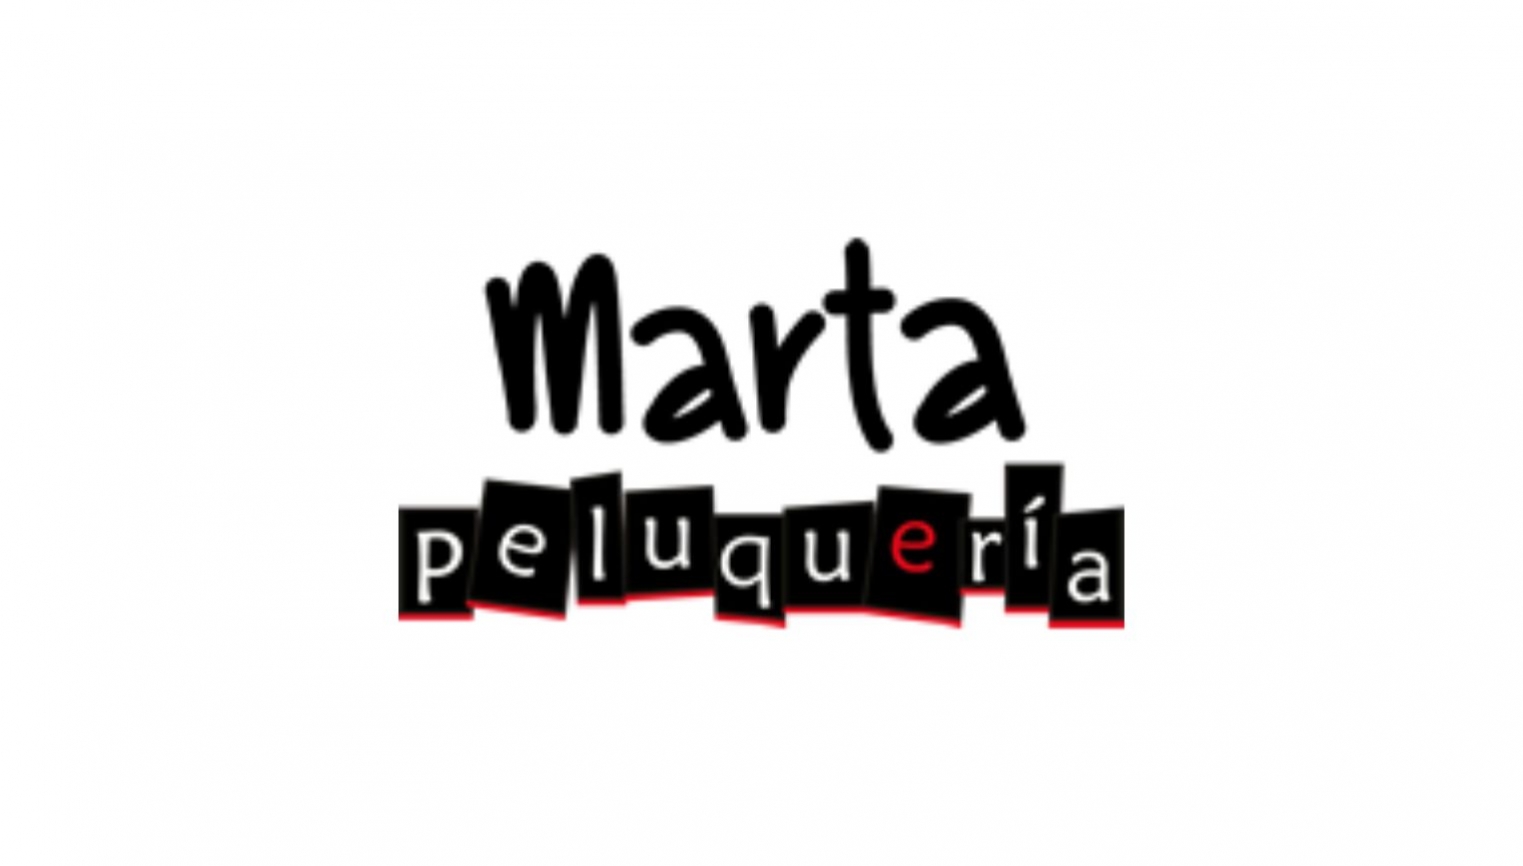 Marta Martinez peluqueria &estética - foto 1/2